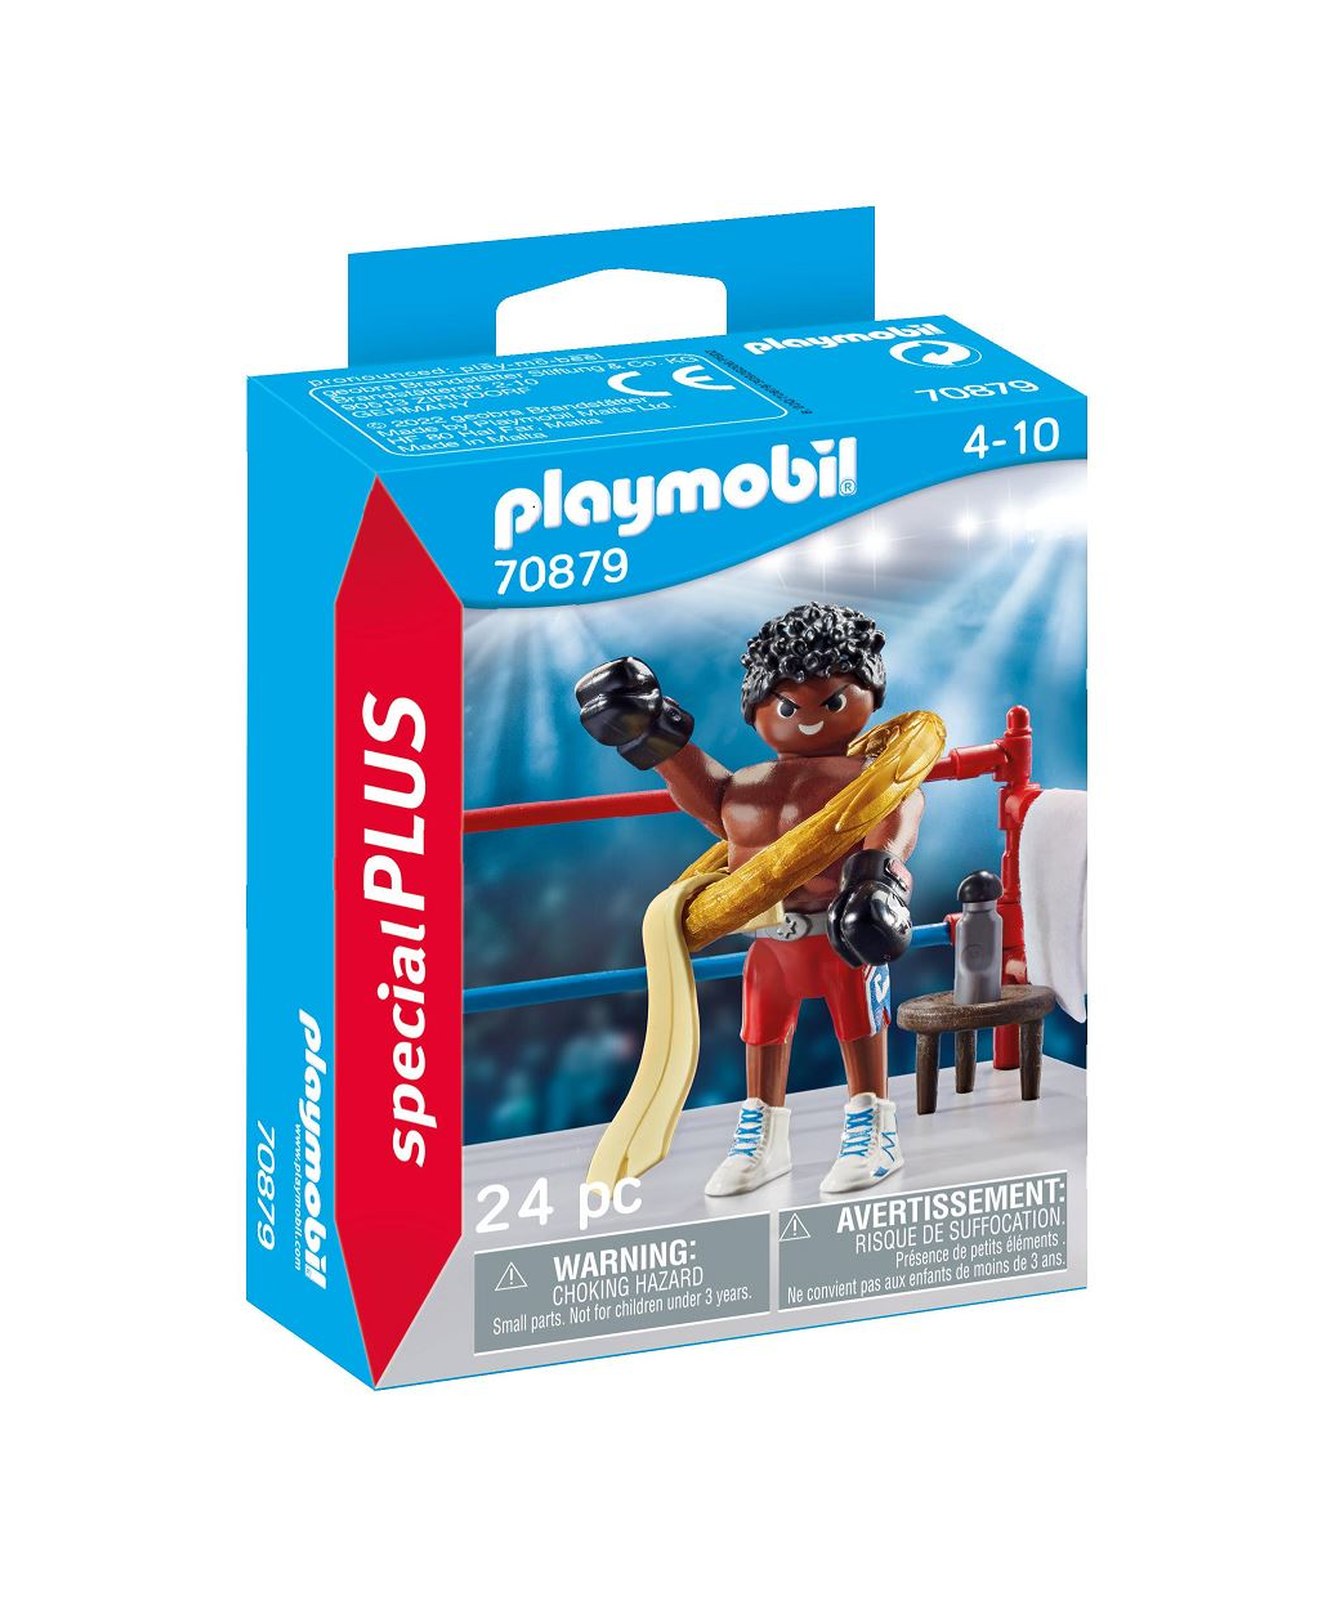 Playmobil special plus 70879 - campione di boxe, età 4-10 anni, totale pezzi 24 - Playmobil